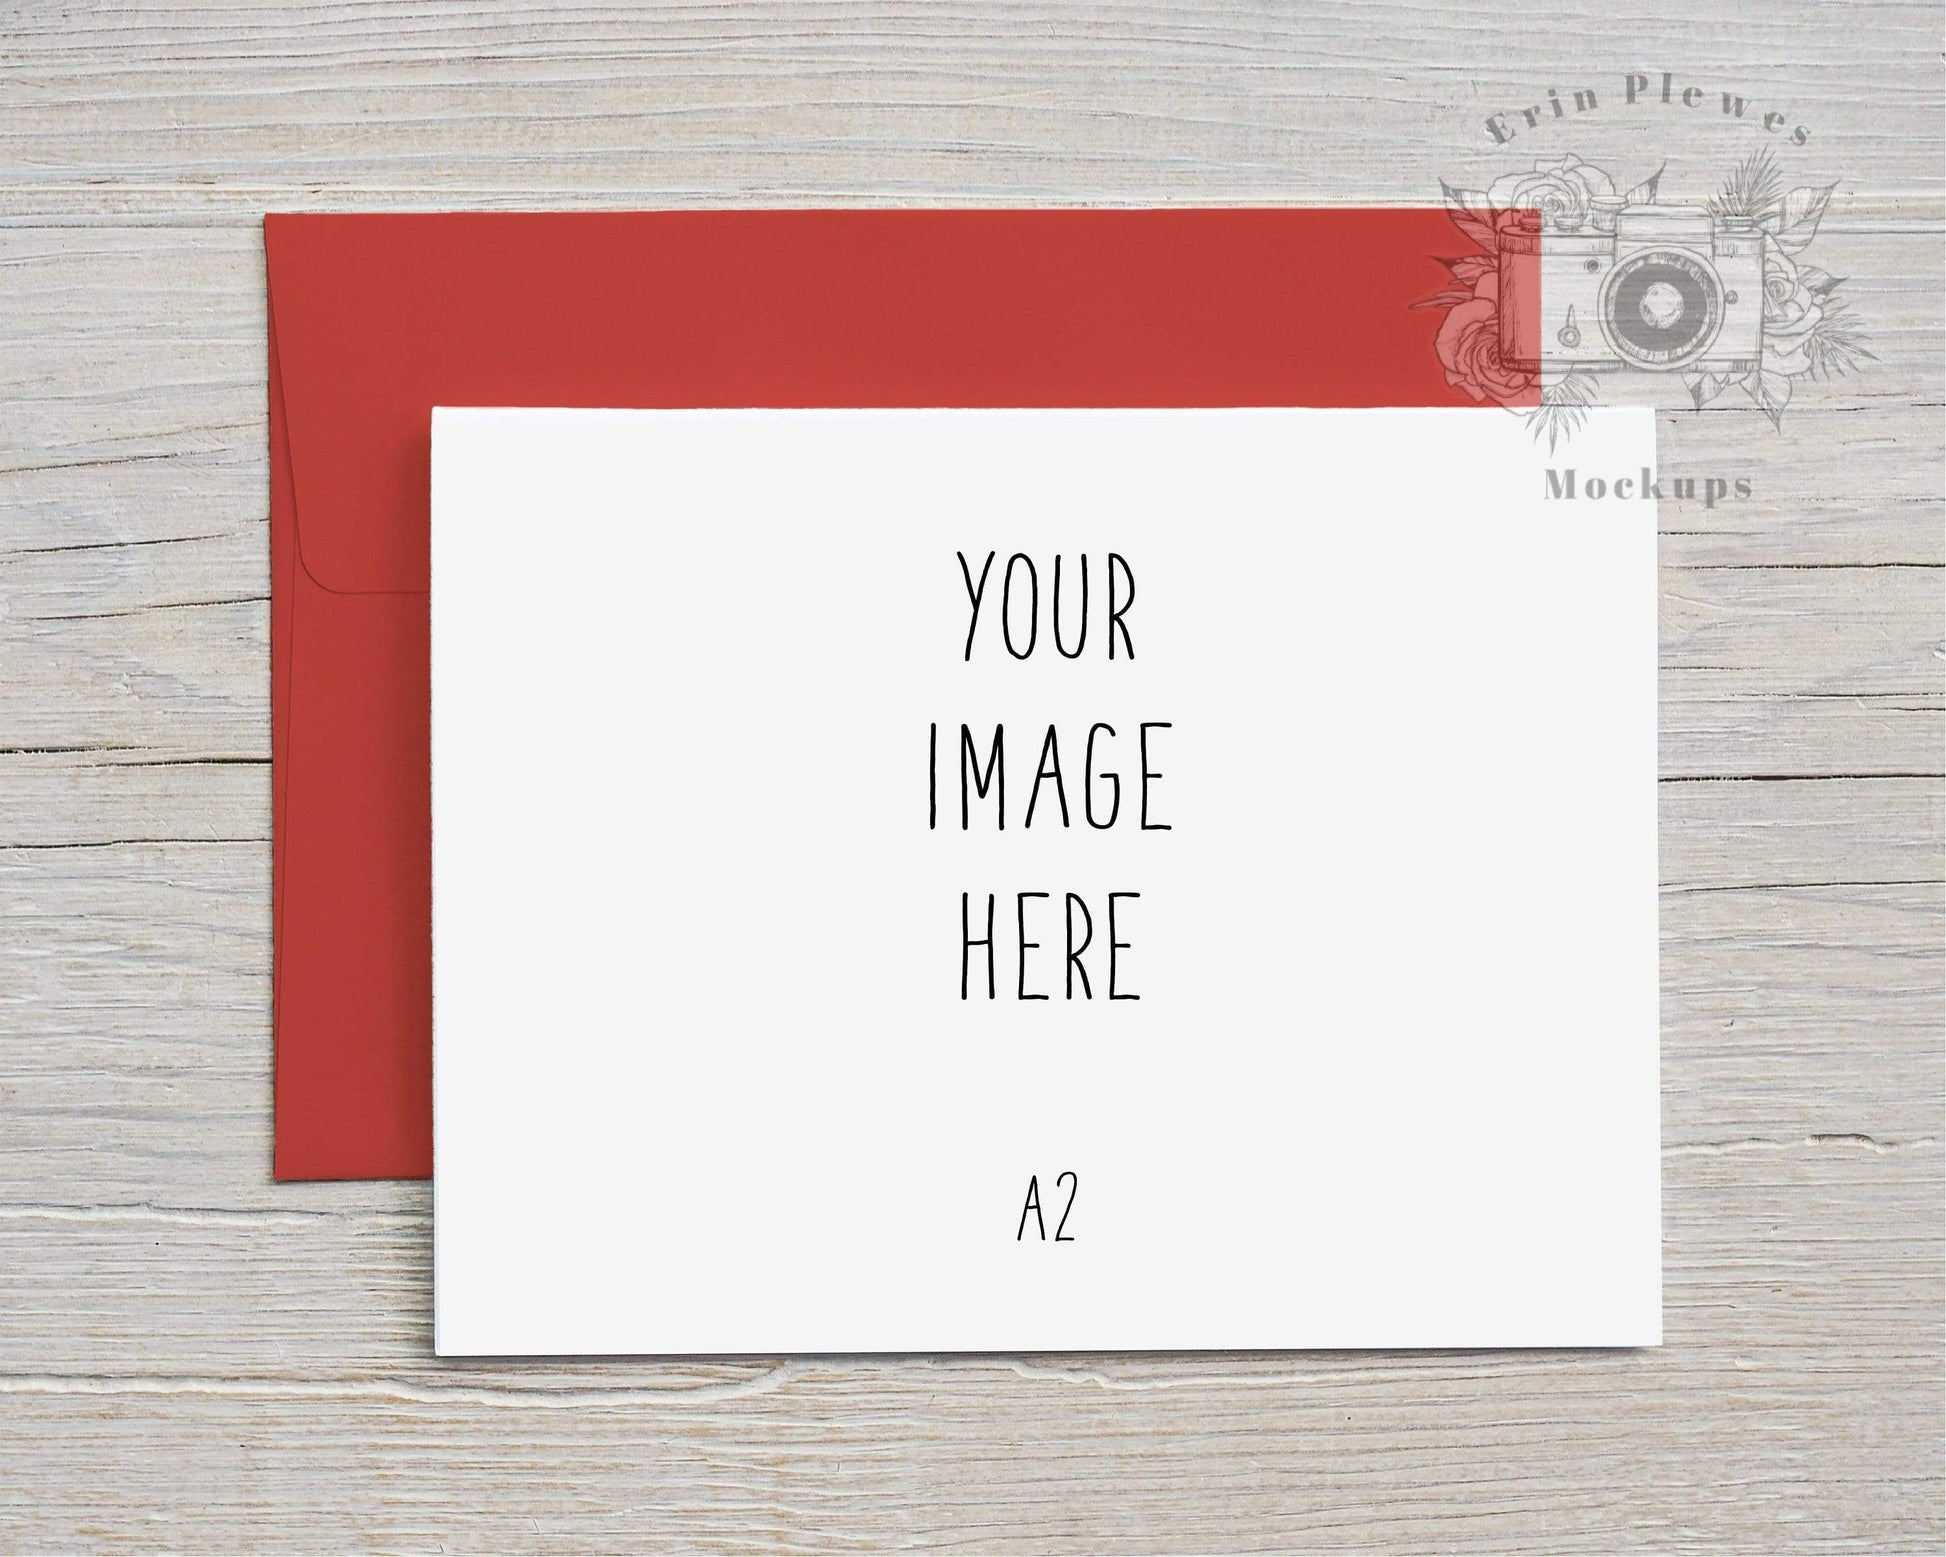 Erin Plewes Mockups A2 Card Mockup Red Envelope, Greeting Card Mock-up Landscape, Christmas Card Lifestyle Photo Template, Jpeg Instant Digital Download